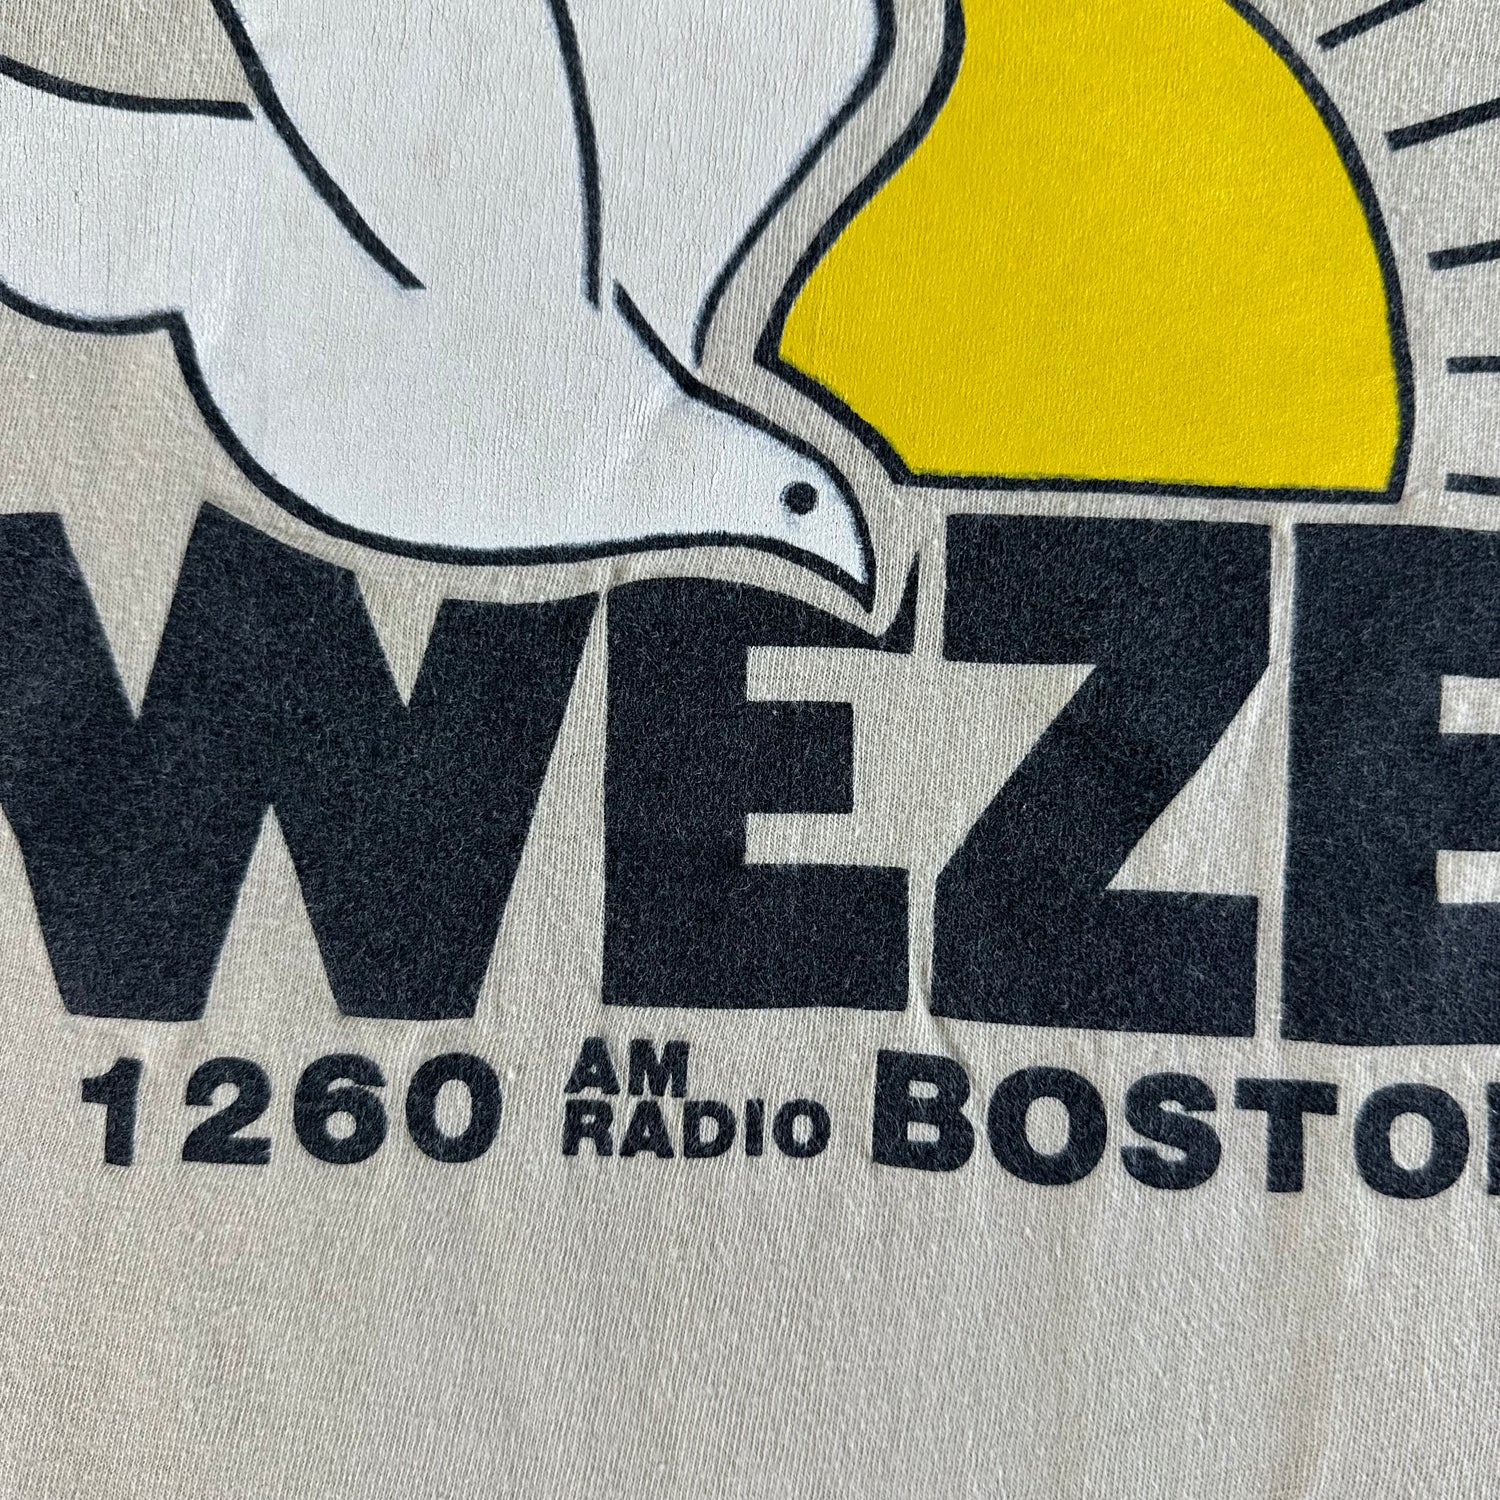 Vintage 1990s Boston T-shirt size Large